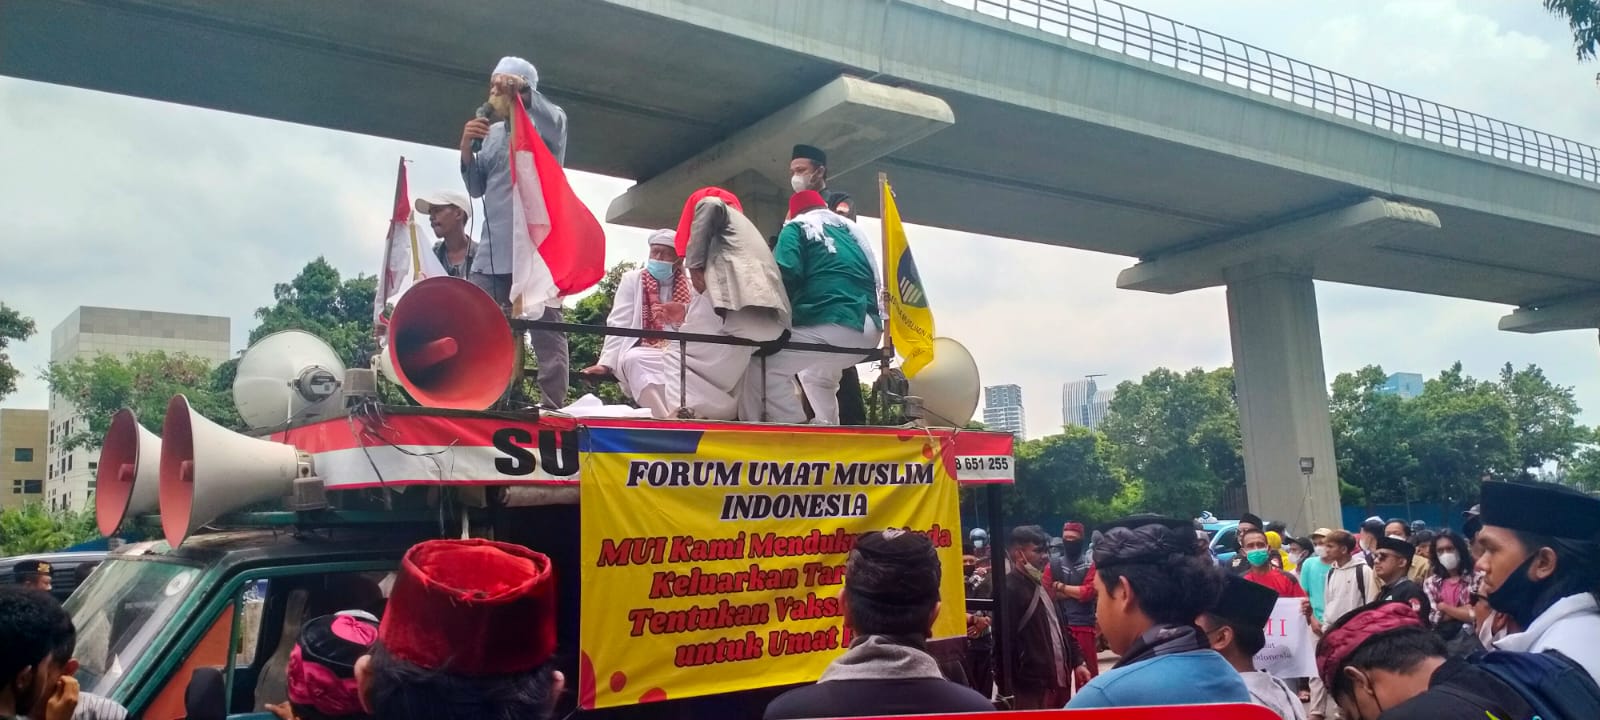 Situasi demonstrasi massa FUMI di depan kantor Kementerian Kesehatan RI, Jakarta, Senin (10/1/2022). Foto: Dede Eka Nurdiansyah/Aktual